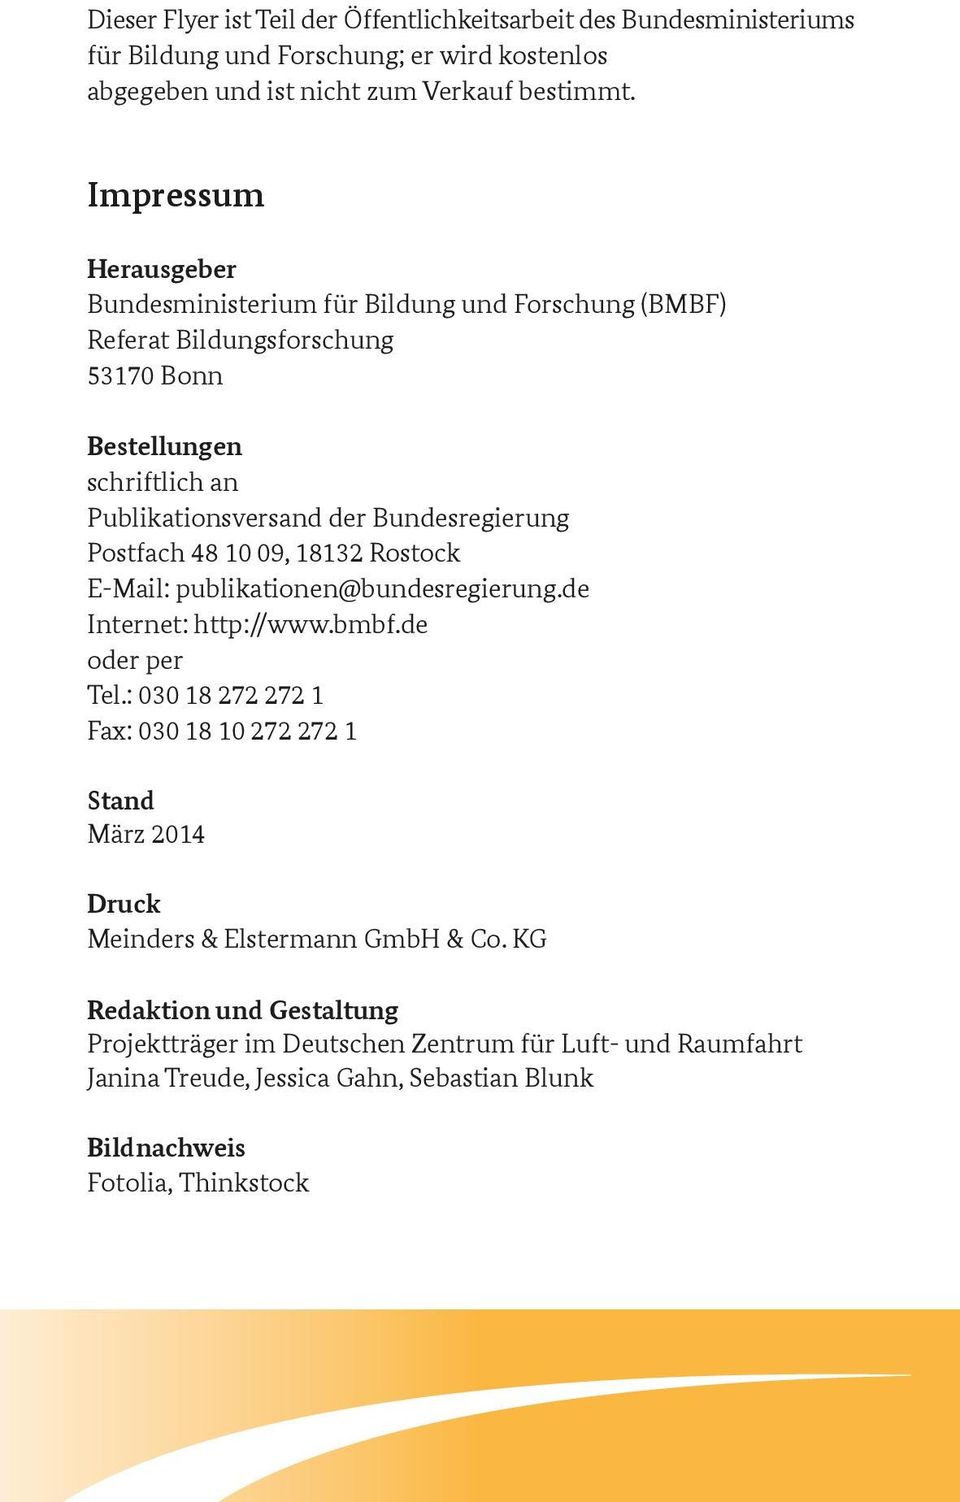 Postfach 48 10 09, 18132 Rostock E-Mail: publikationen@bundesregierung.de Internet: http://www.bmbf.de oder per Tel.